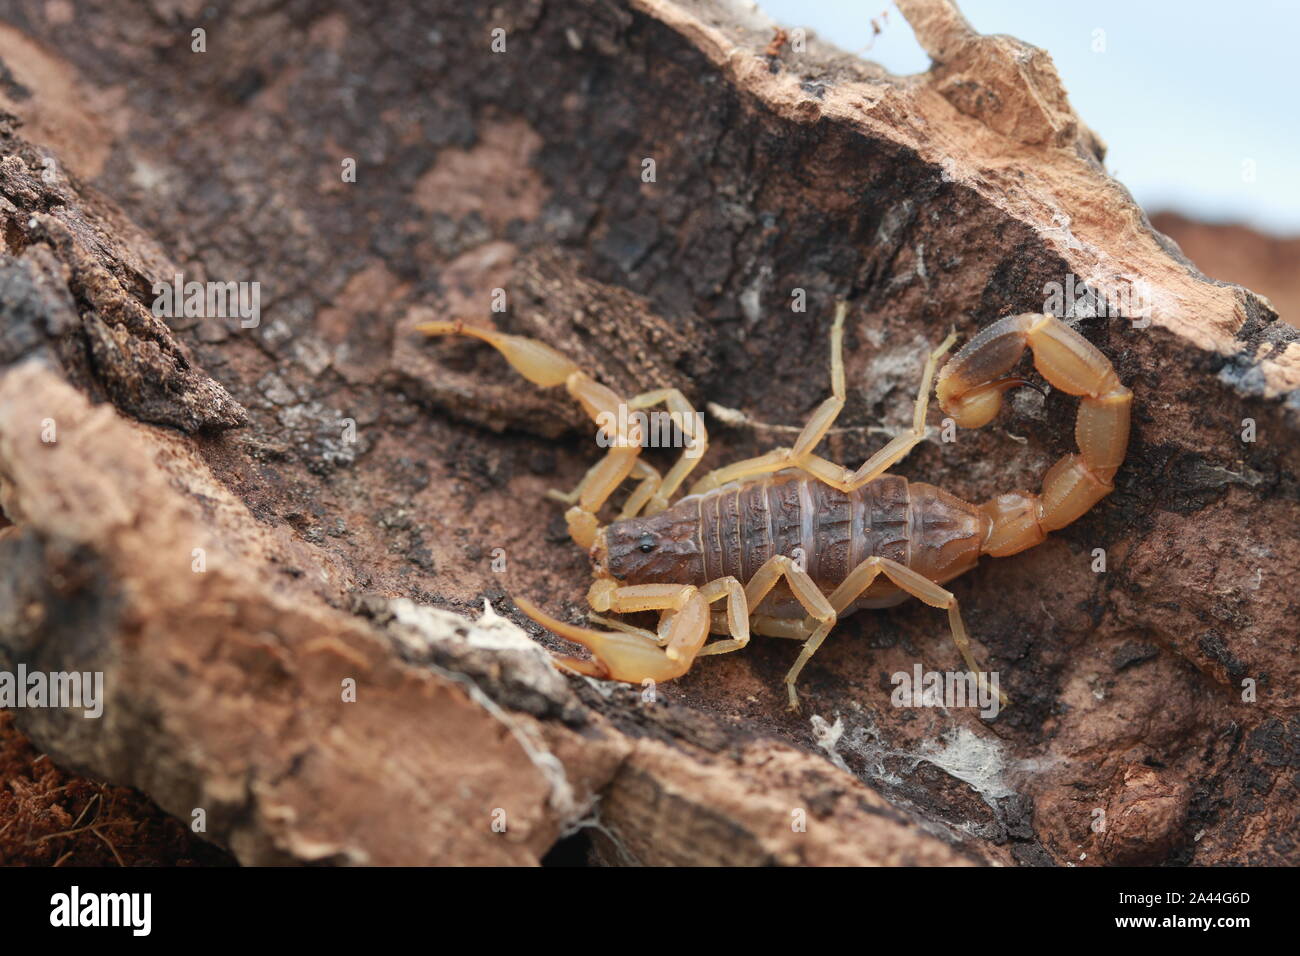 Chinese Scorpion (Buthus martensii) Stock Photo